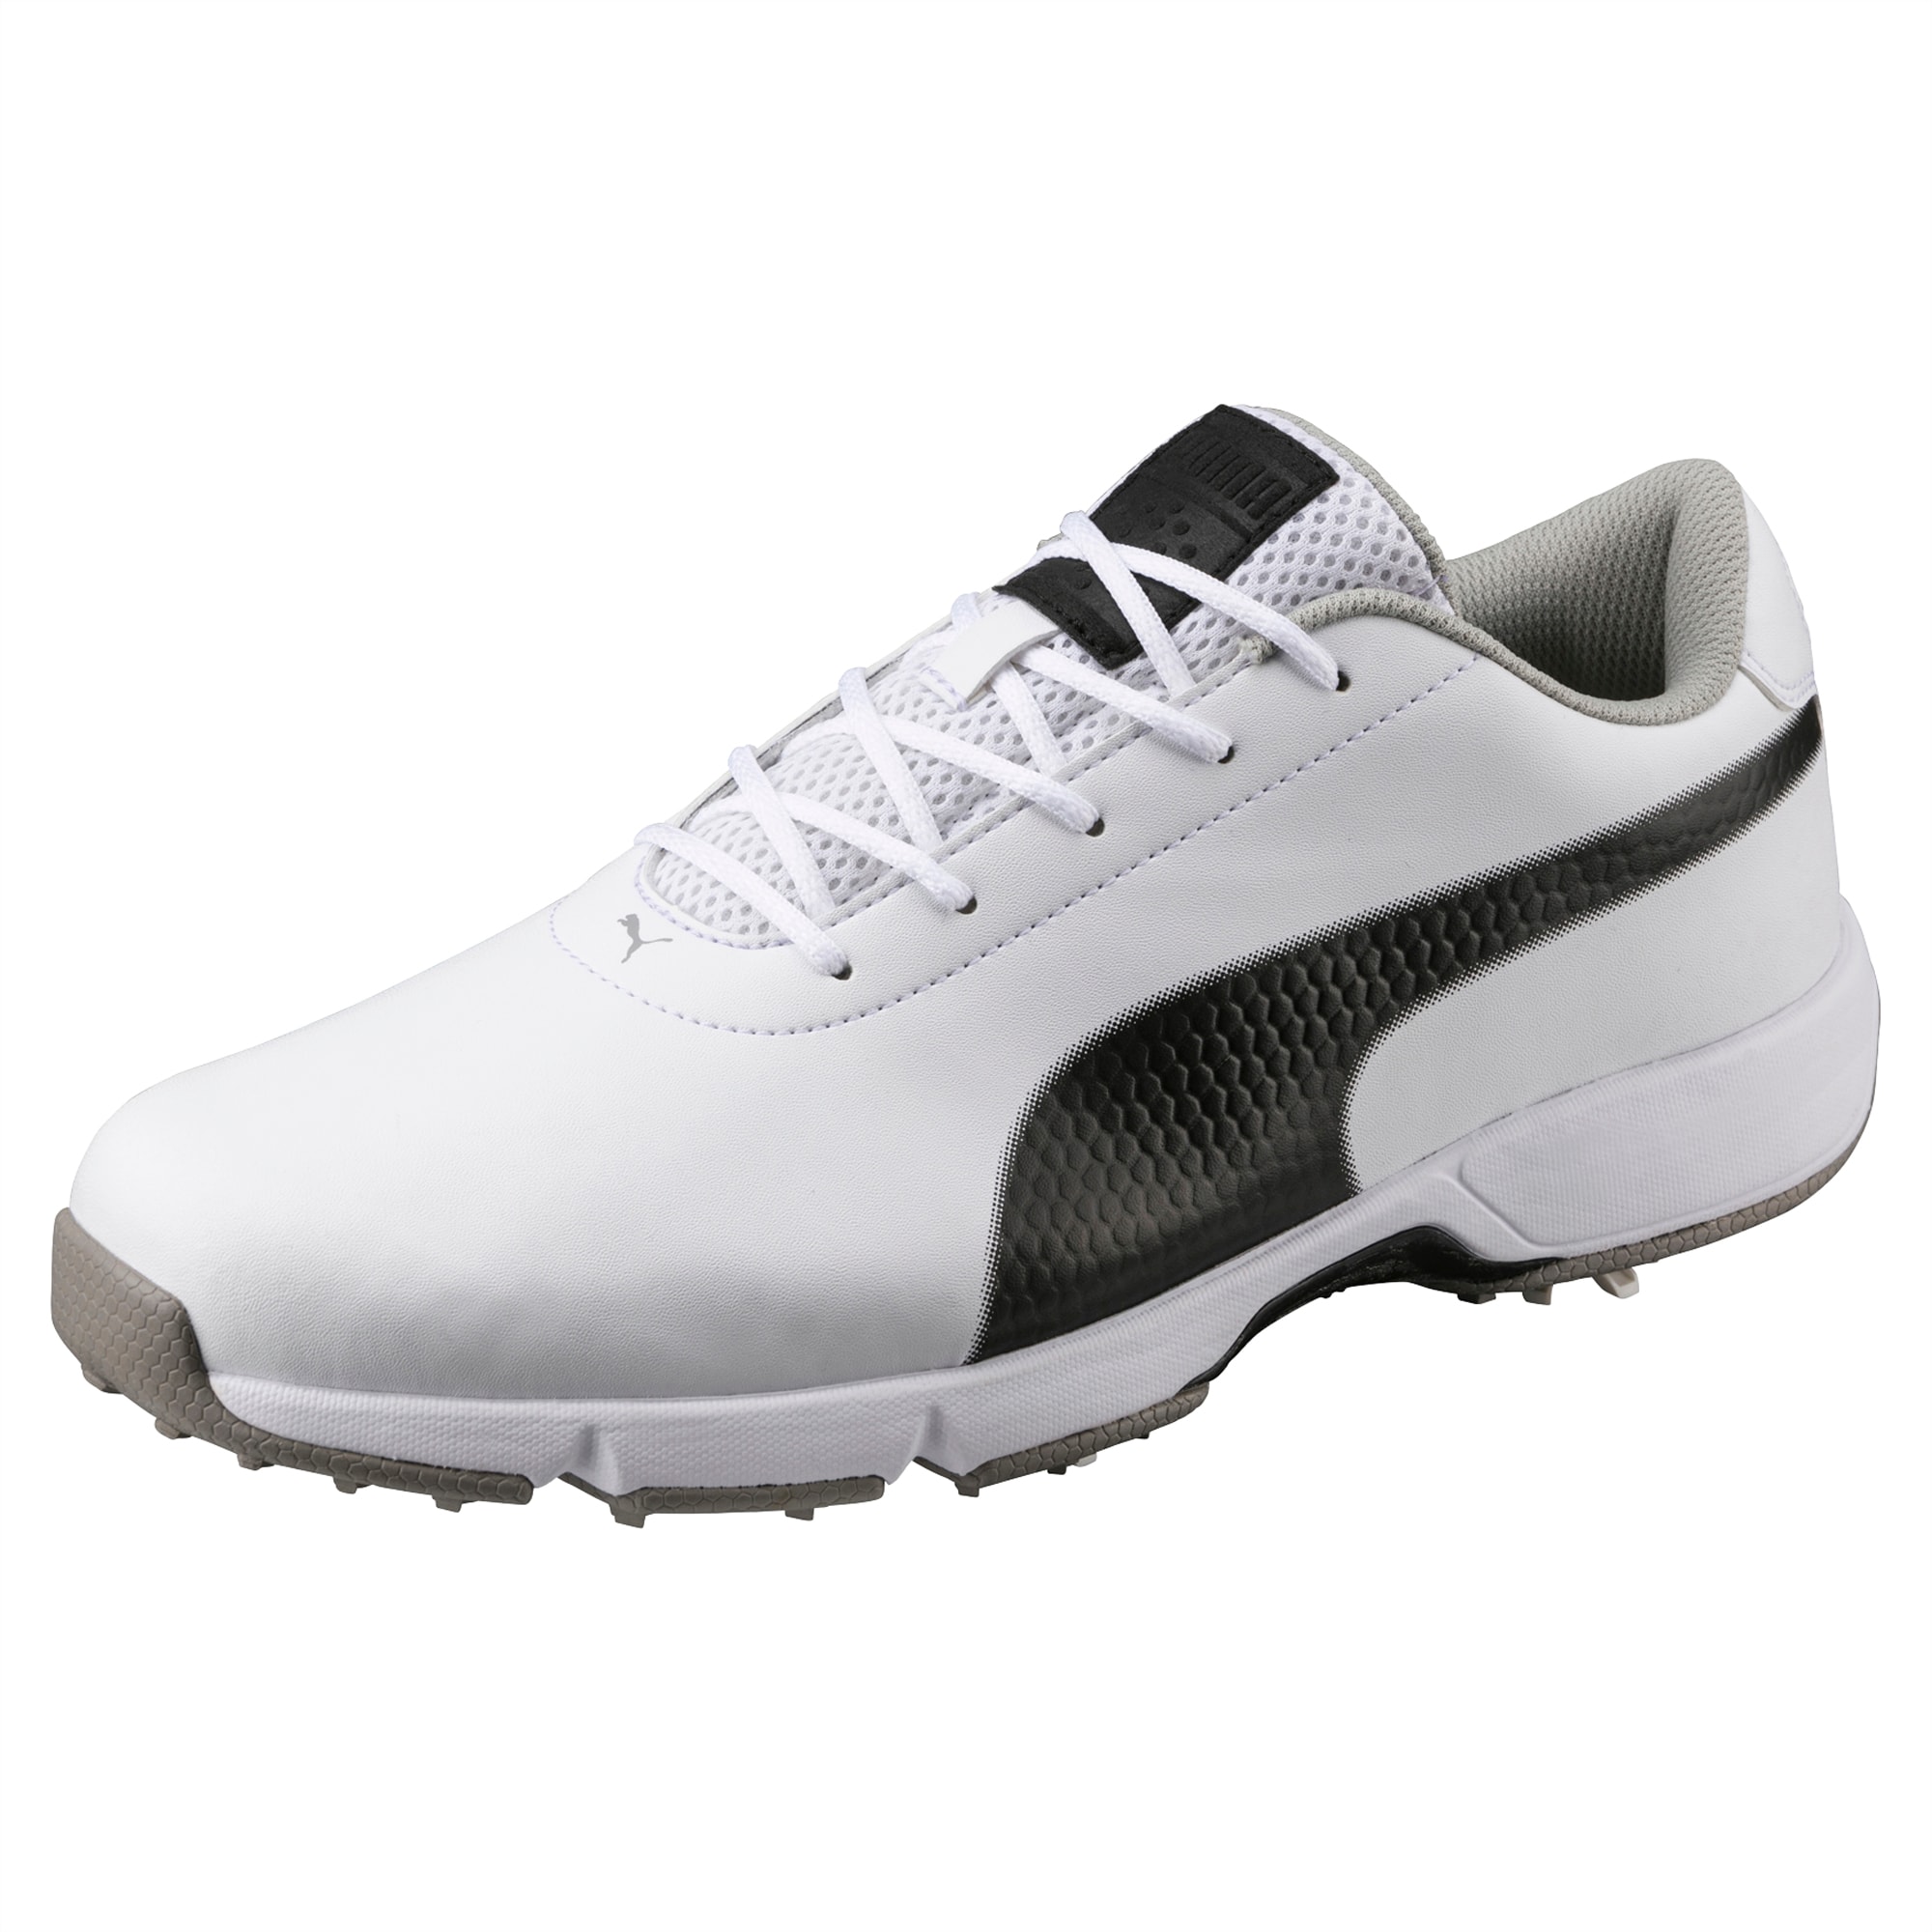 Drive Cleated Classic Men's Golf Shoes | PUMA Golf | PUMA